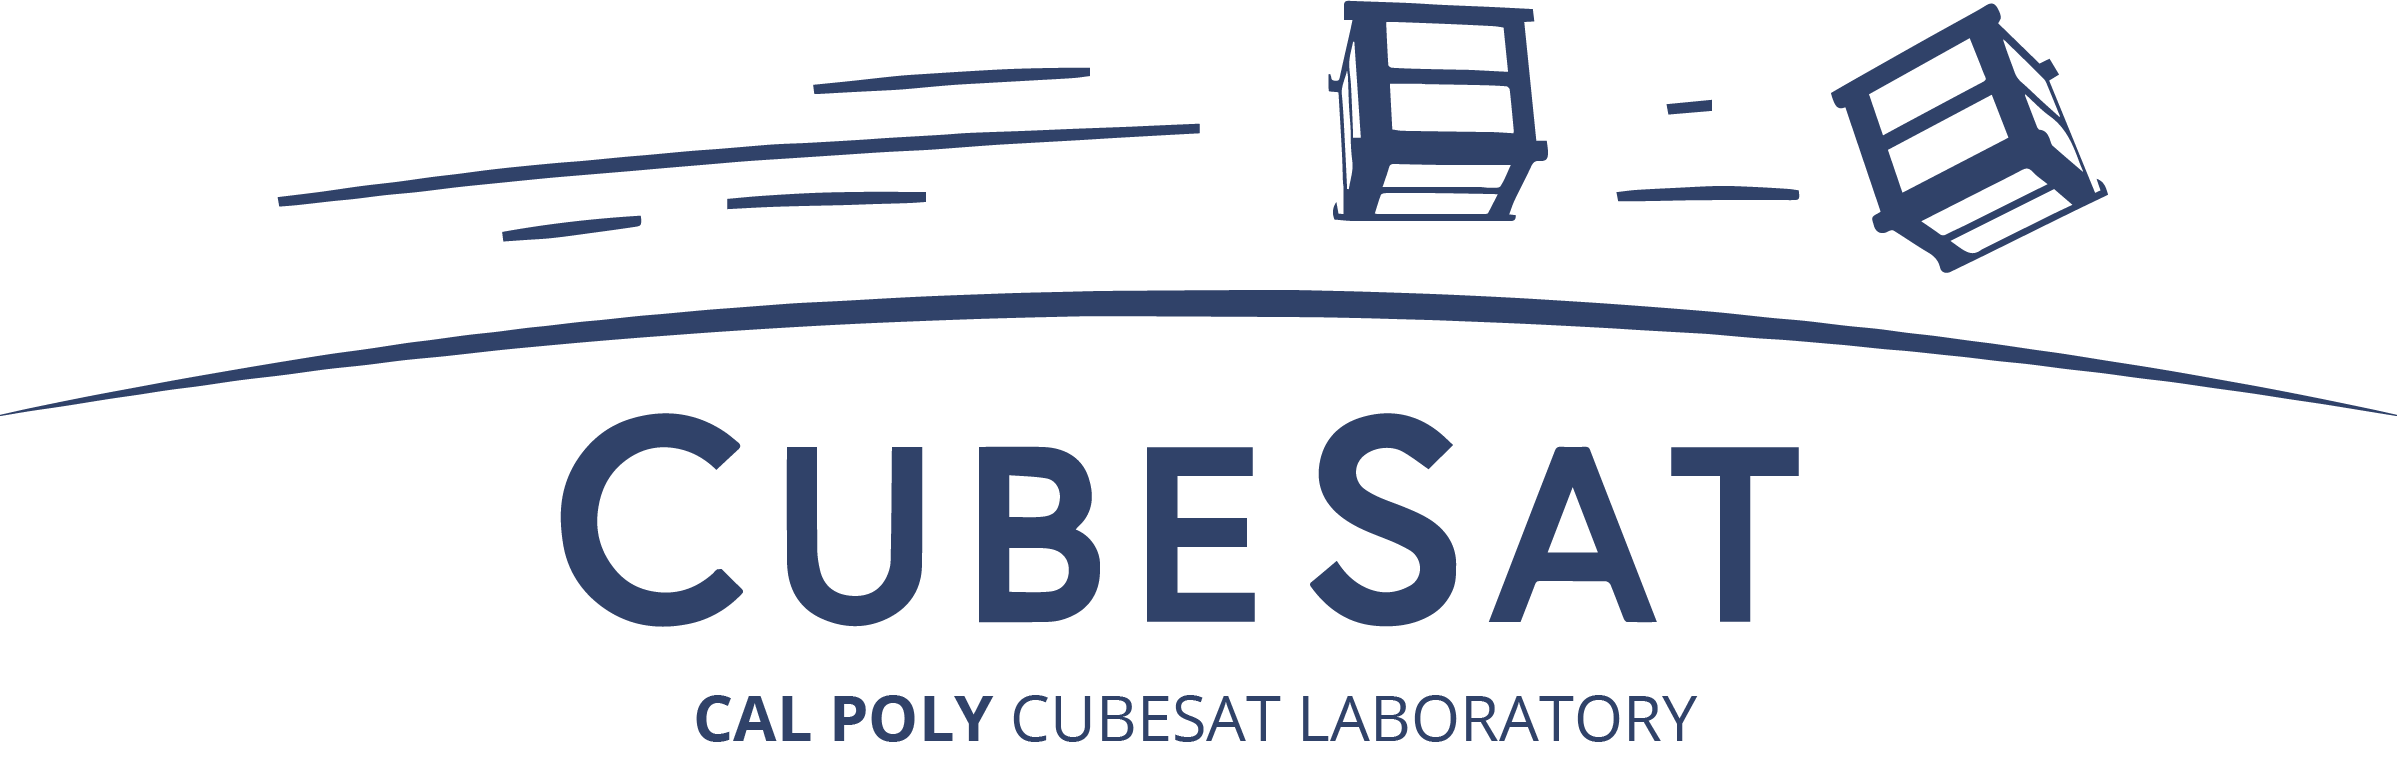 Cal Poly CubeSat Lab